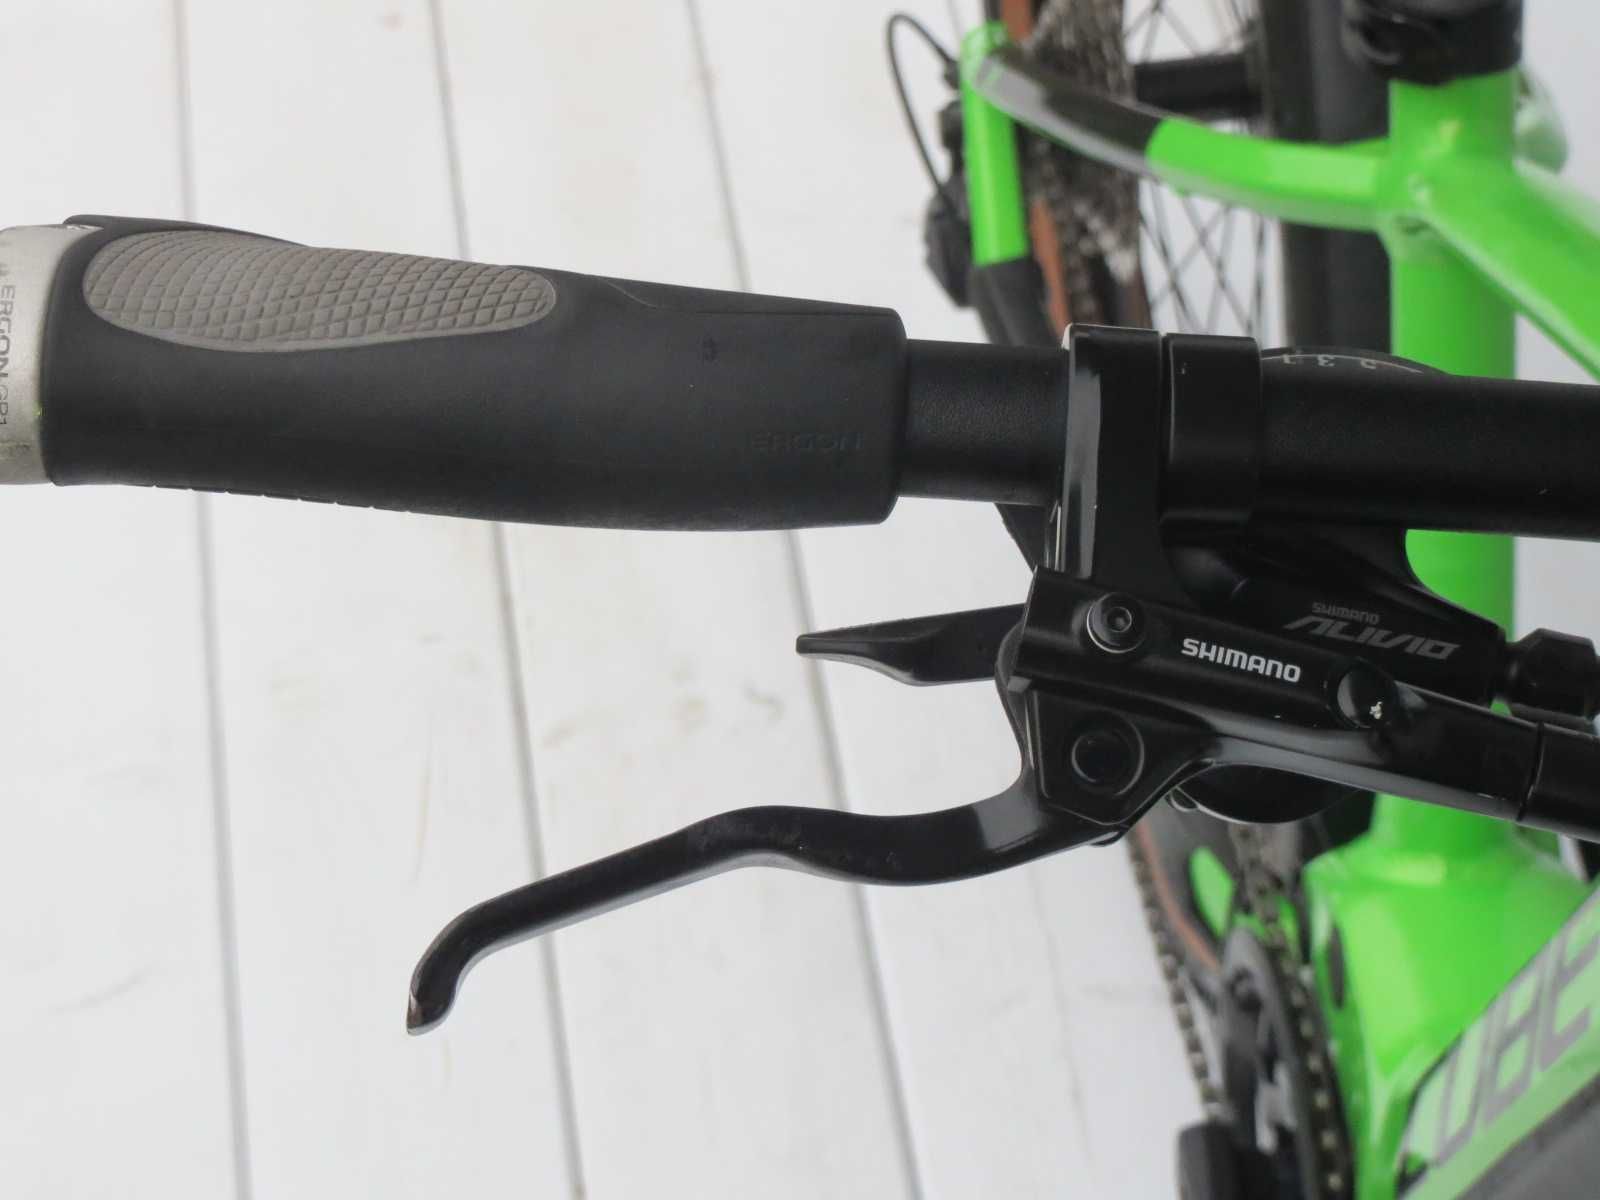 Продам E-bike CUBE REACTION Performance 500 ALLROAD 29" - 2022